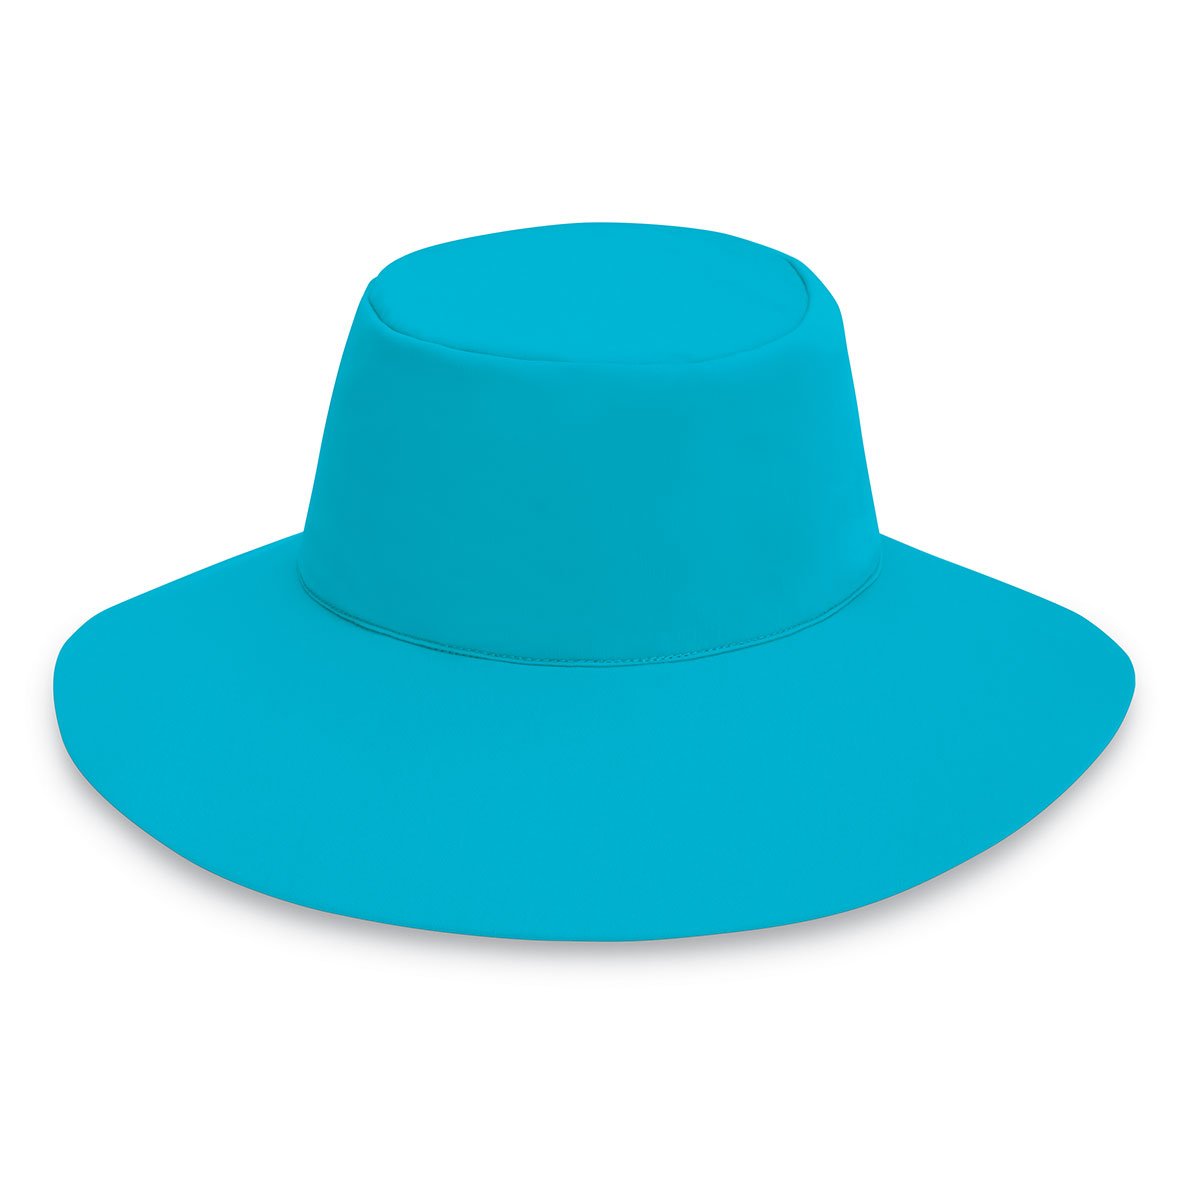 Wallaroo Hat Company: Women's Aqua Hat - Turquoise